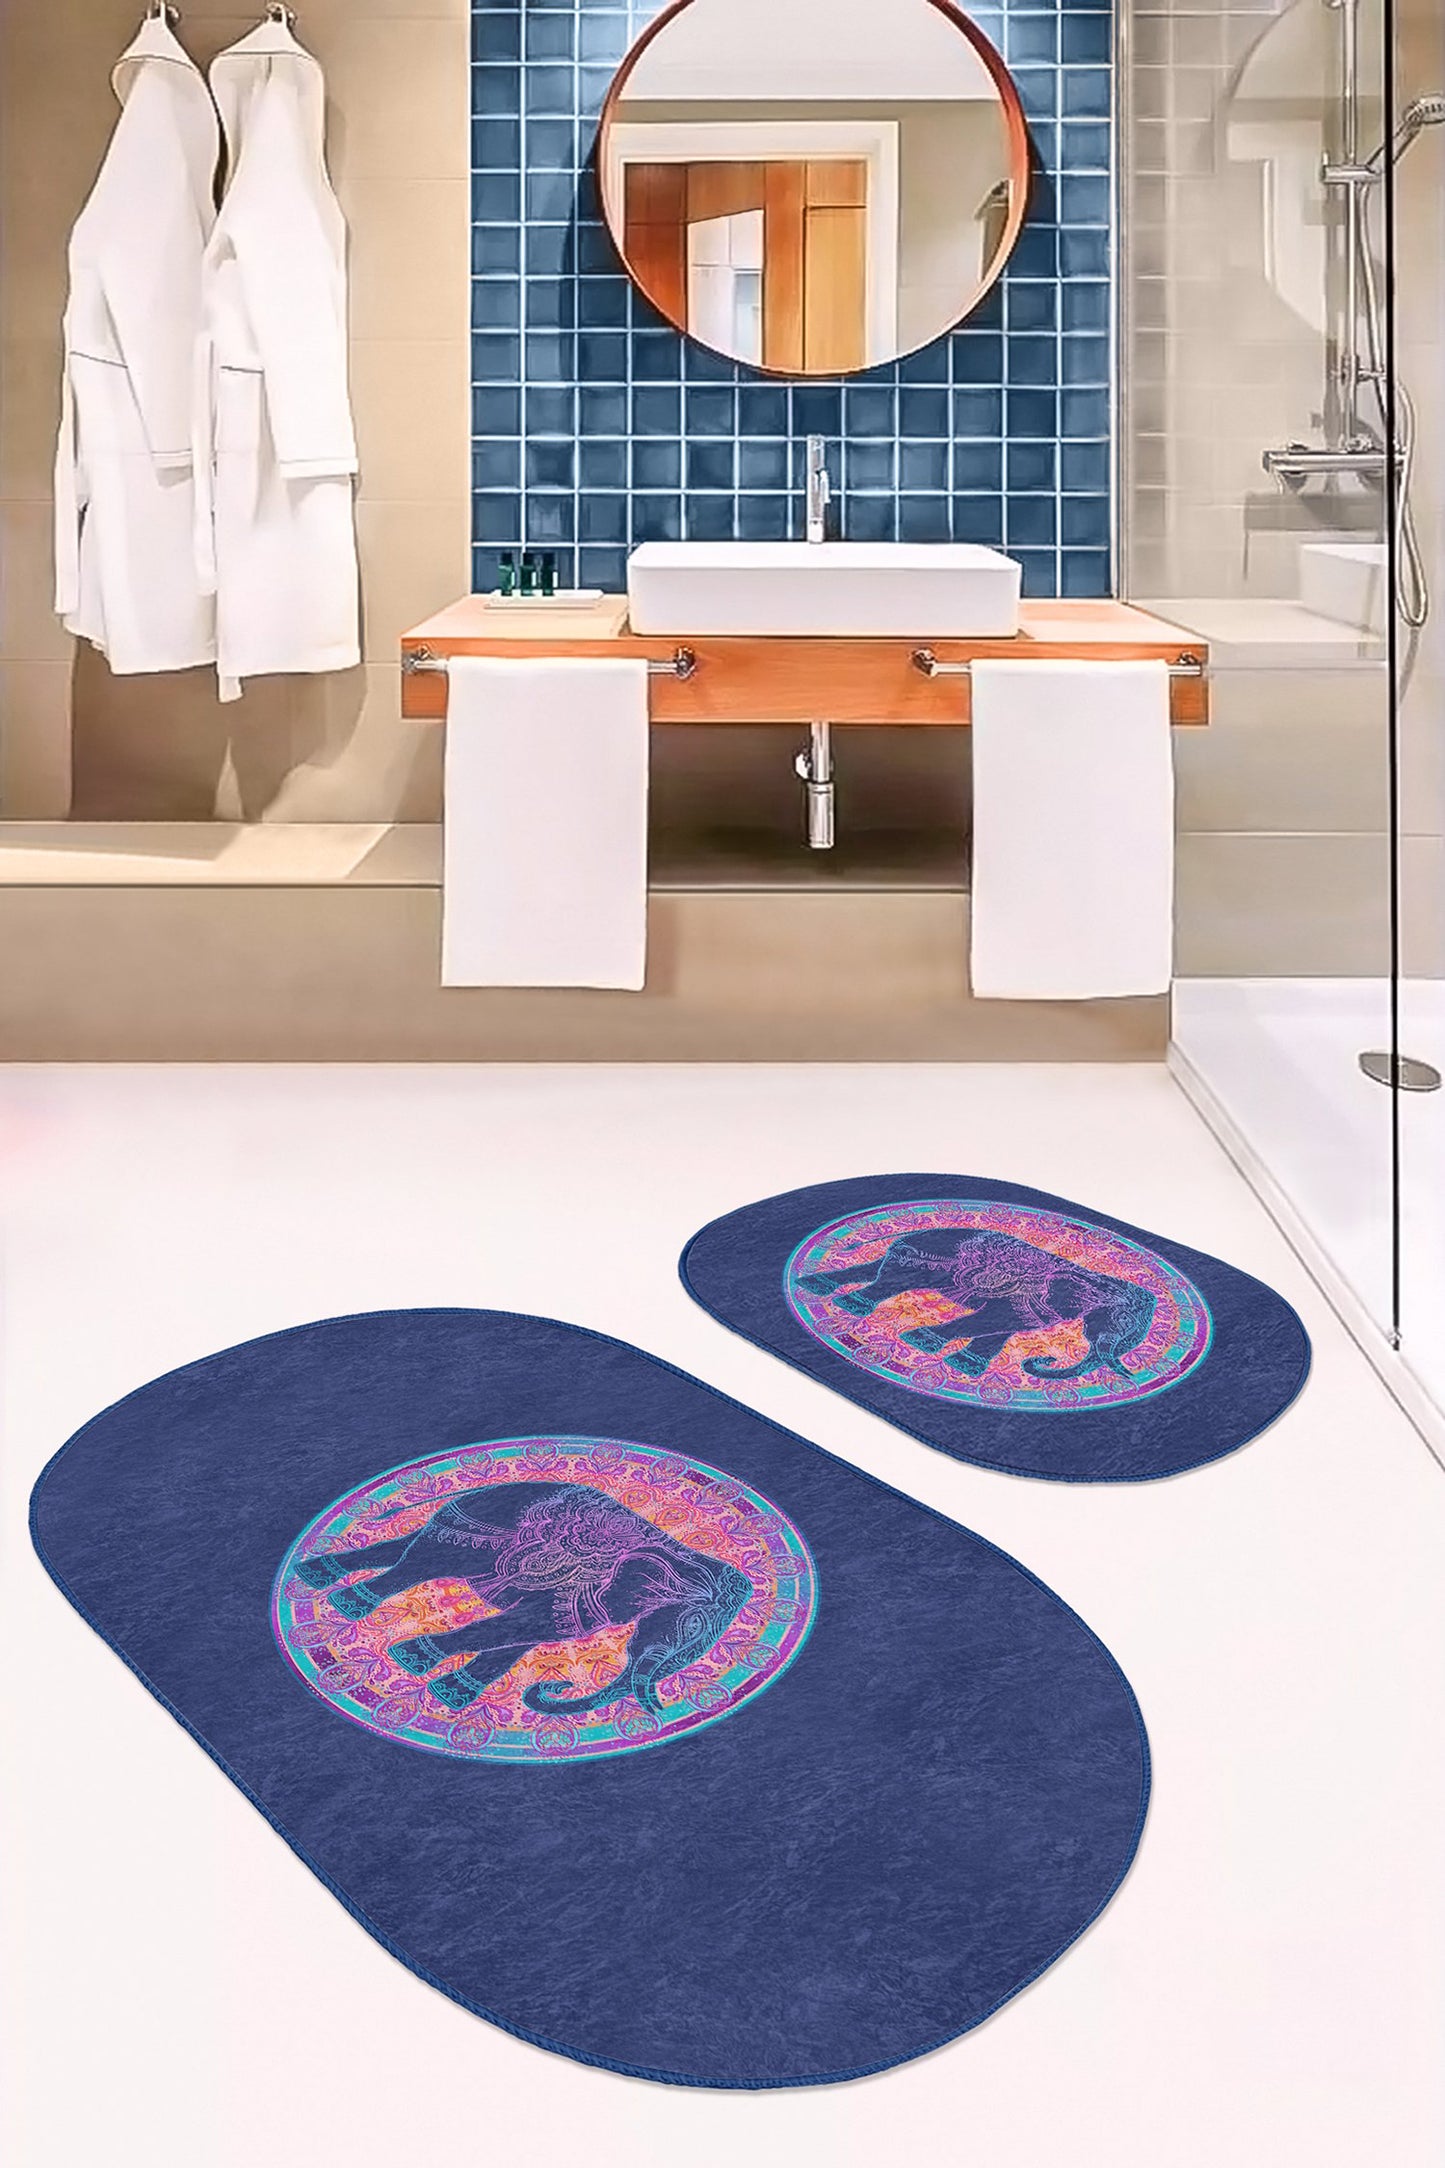 Decorative Bath Mat Set with a Charming Array of Mystic Elephant Patterns